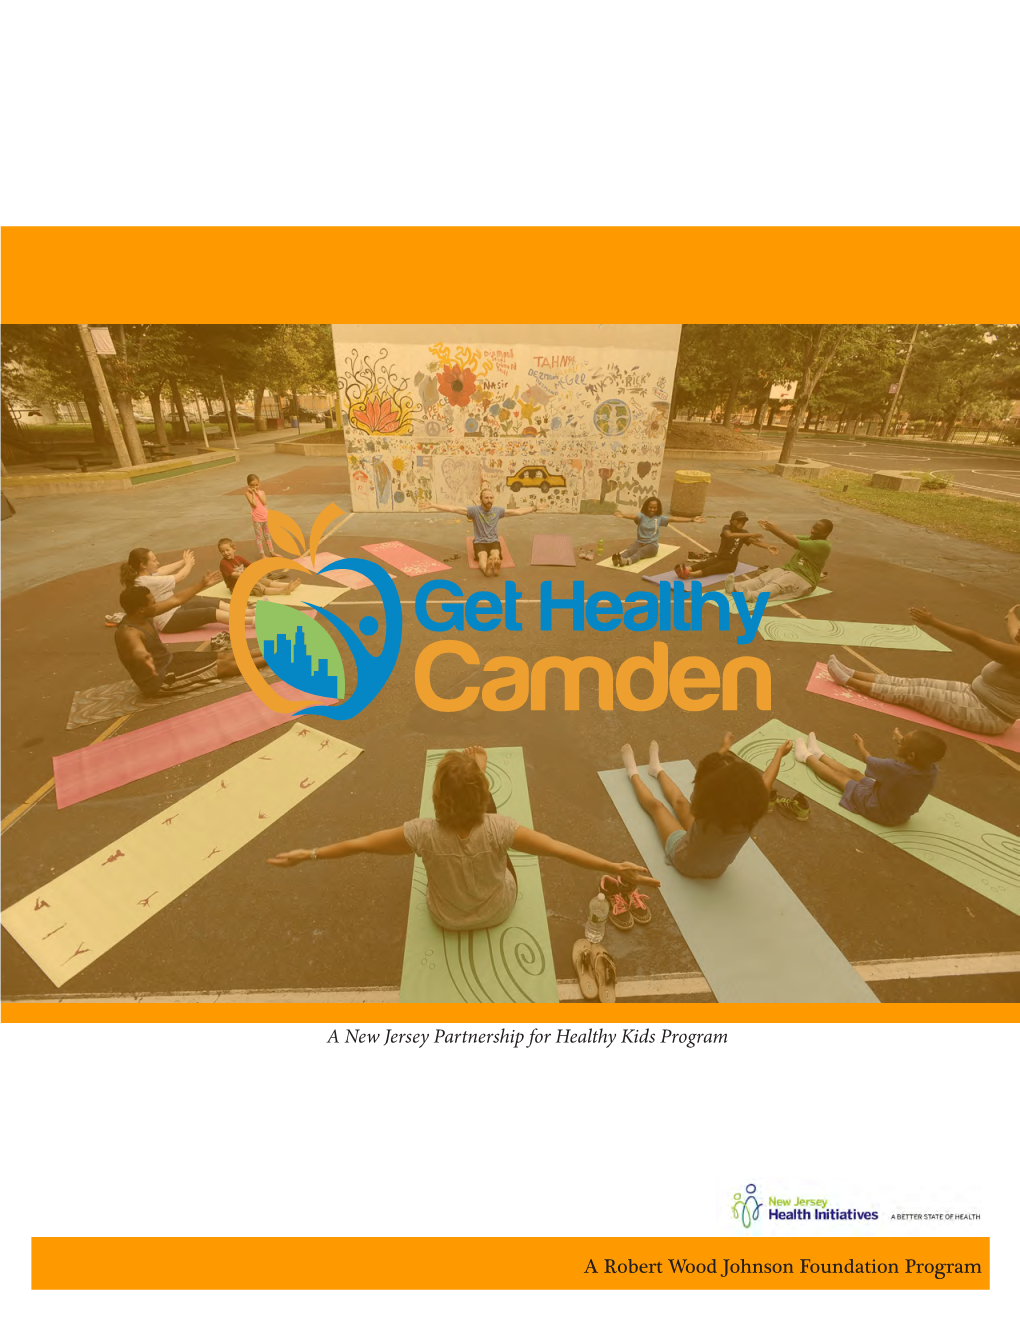 Get Healthy Camden's Blueprint for Action